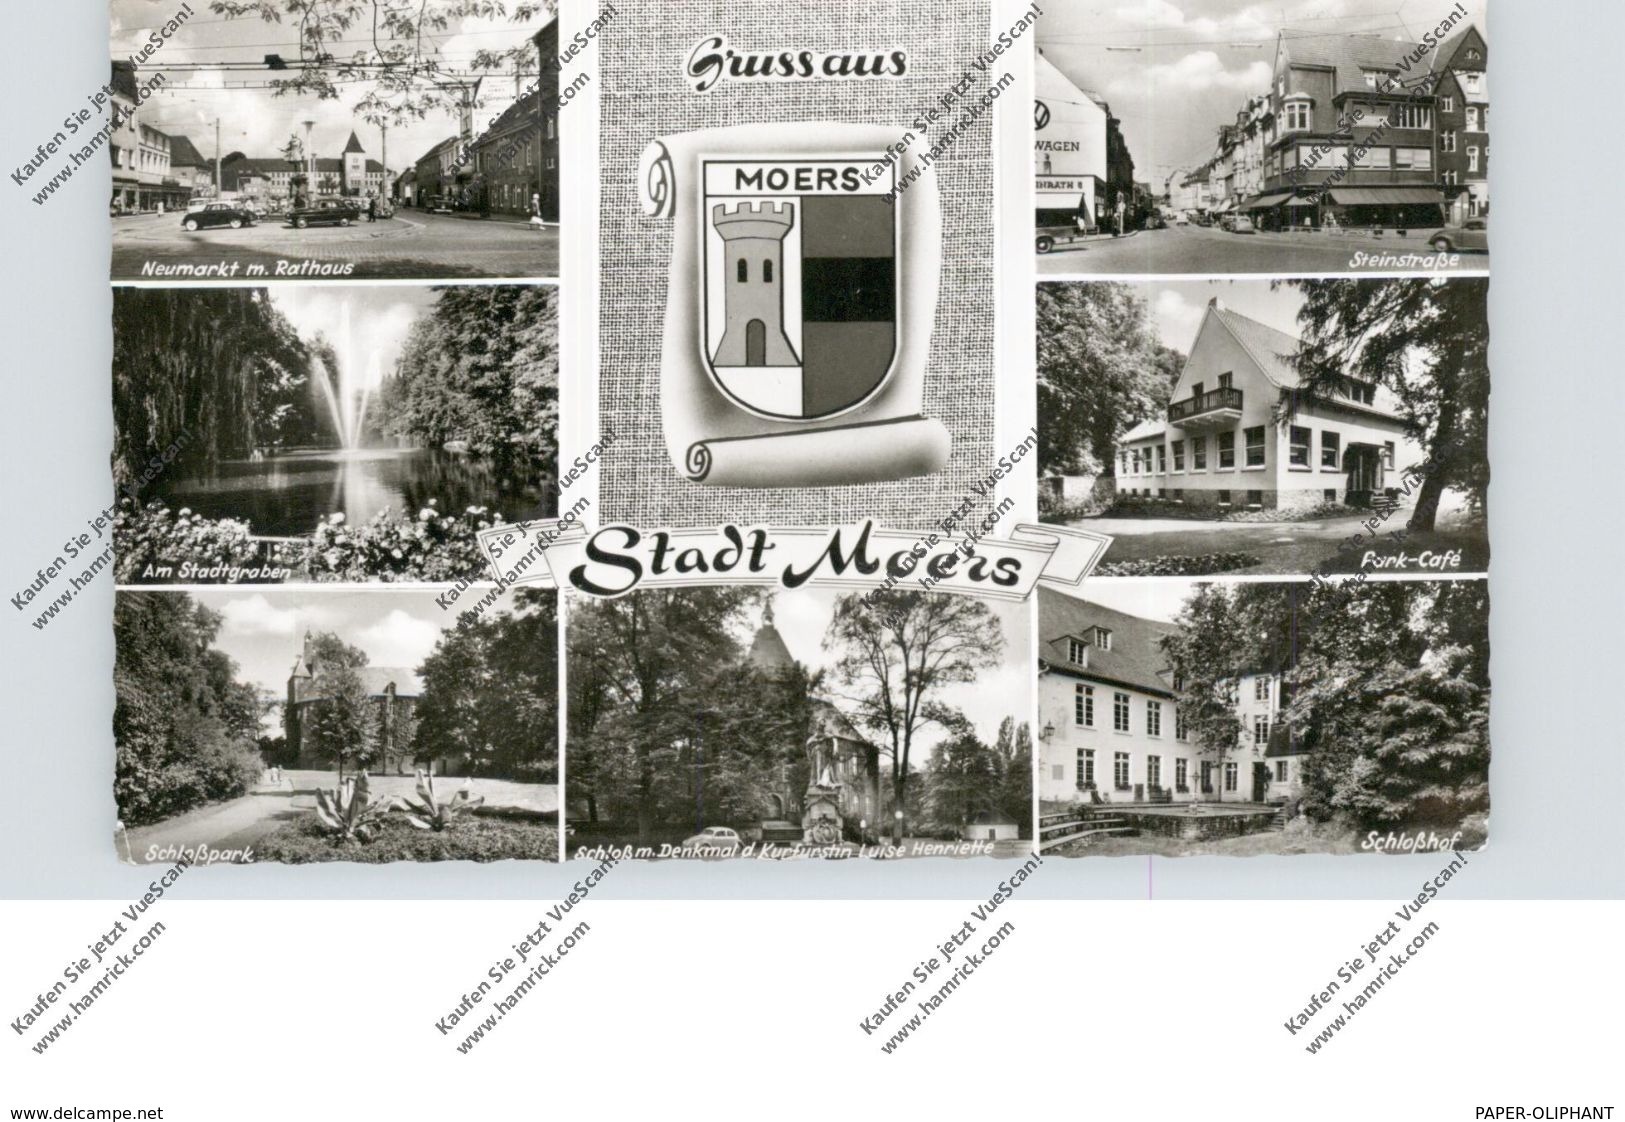 4130 MOERS, Park-Cafe, Steinstrasse, Schloßhof, Denkmal, Neumarkt, Stadtwappen..1965 - Moers